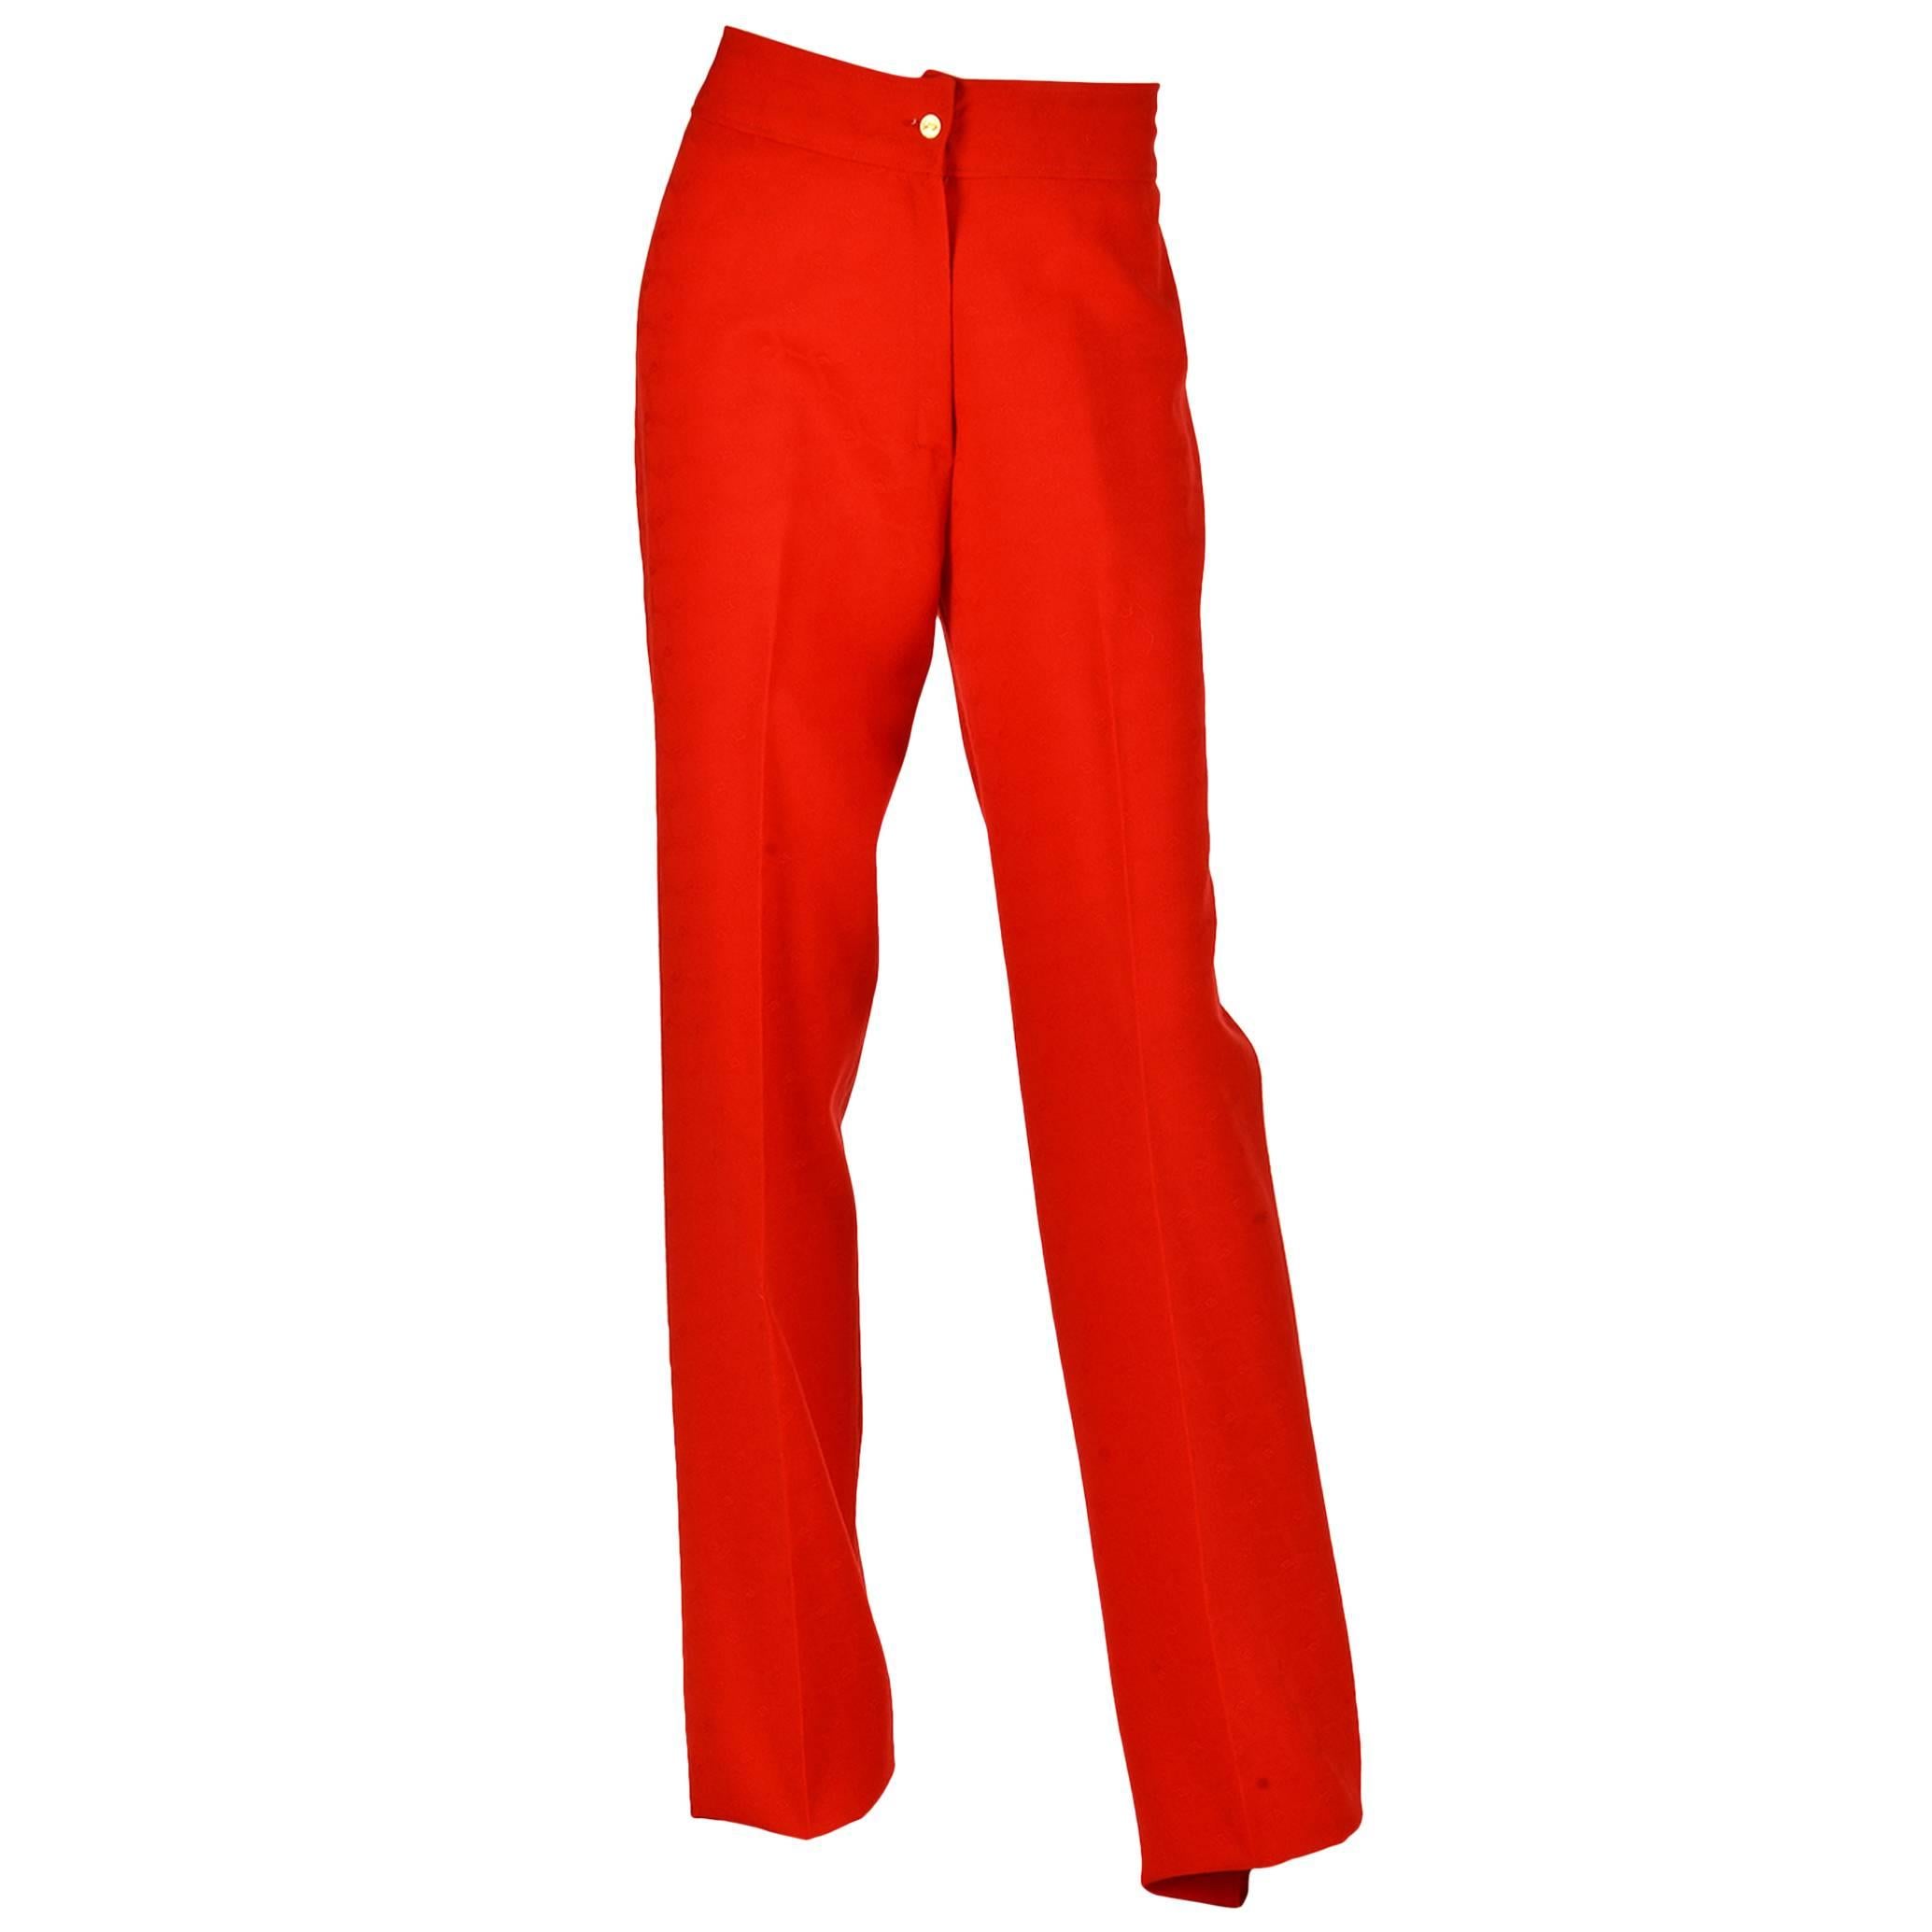 Roberta di Camerino Vintage Red Wool Trousers